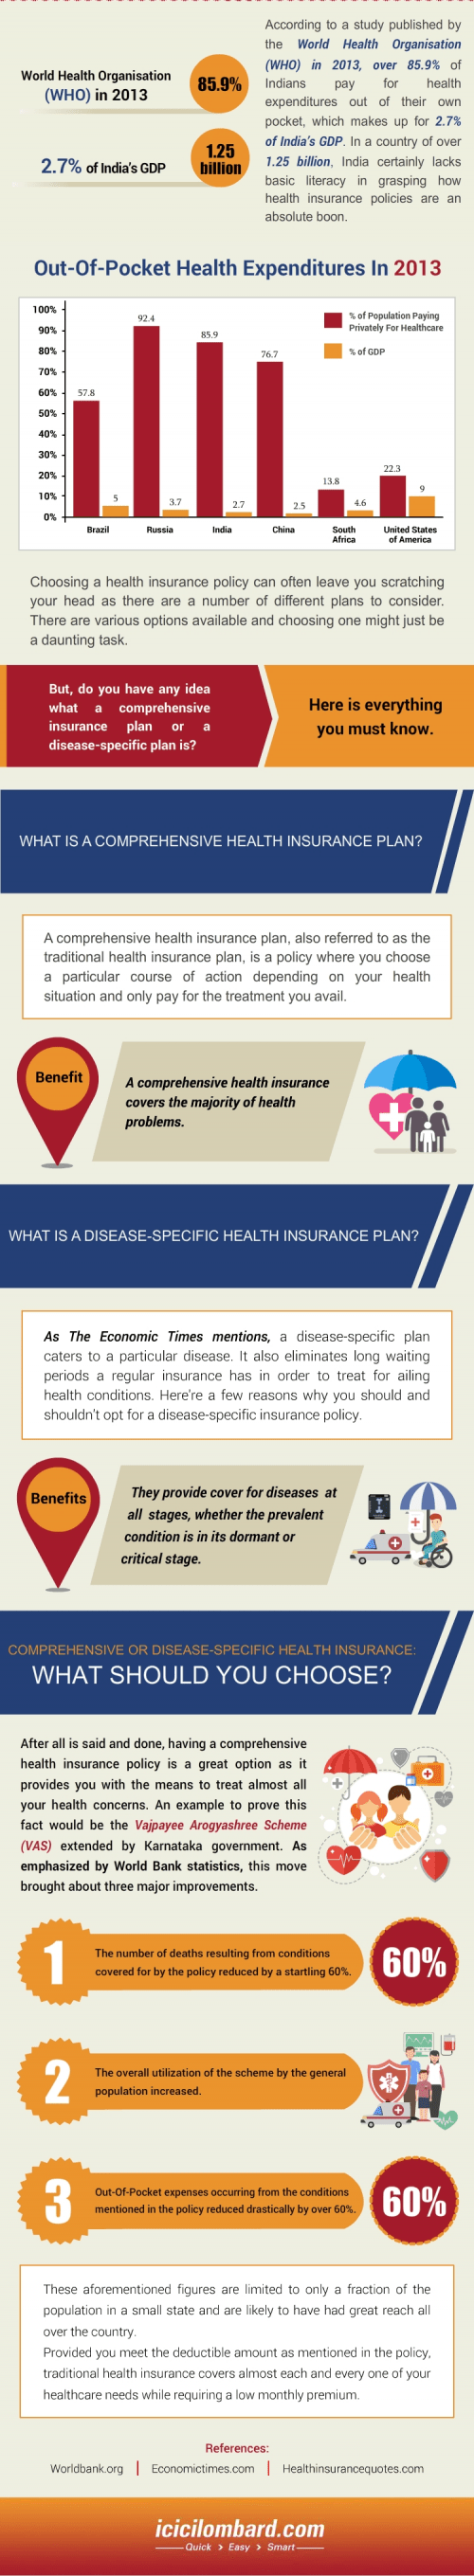 Disease Specific vs. Comprehensive Health Insurance Plan